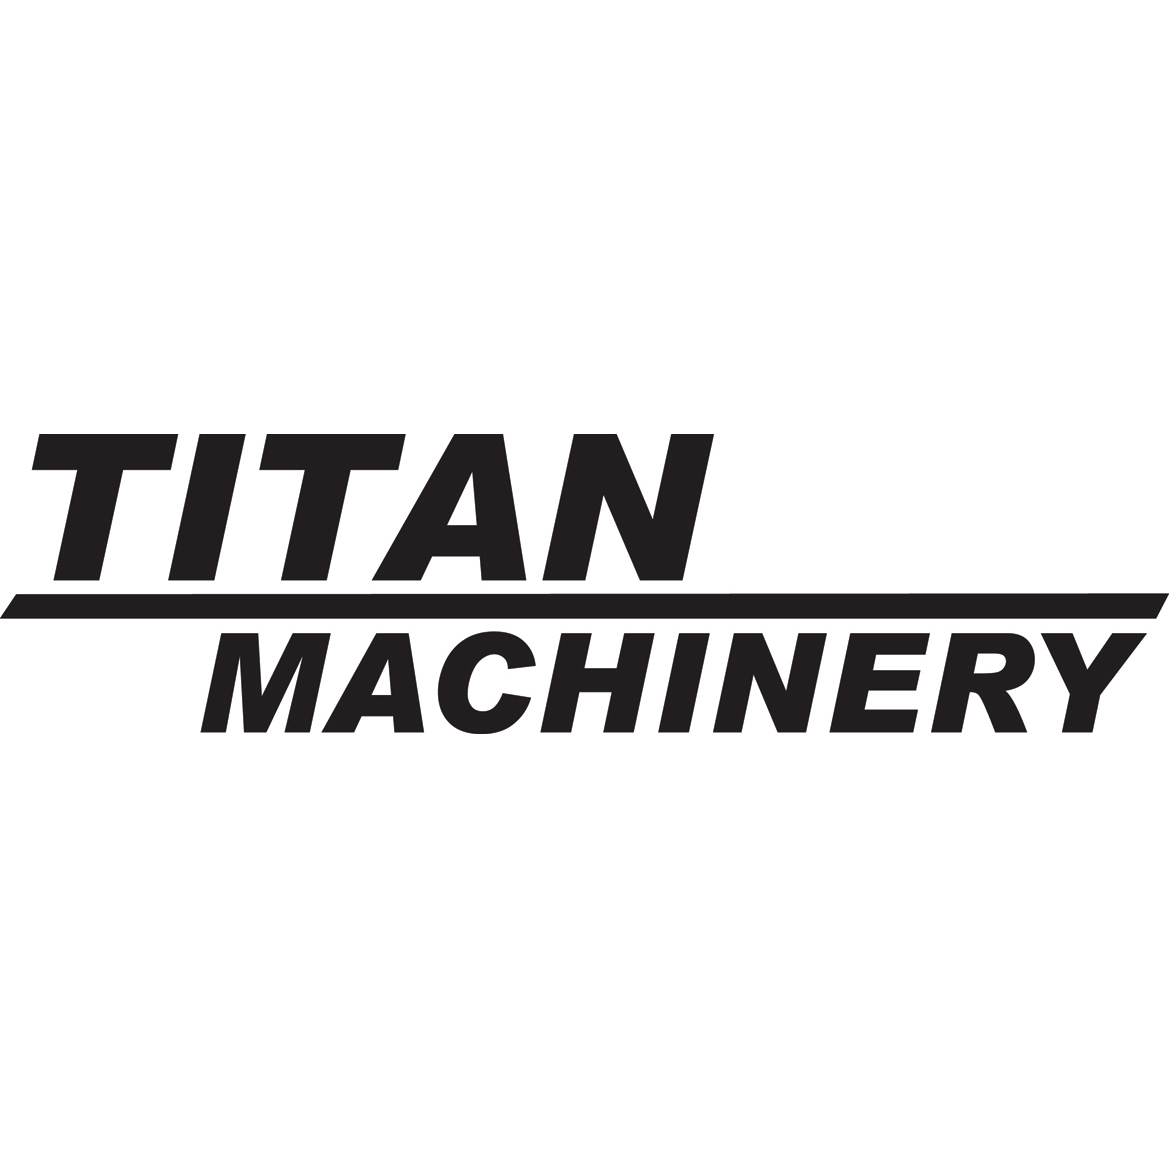 Titan Machinery